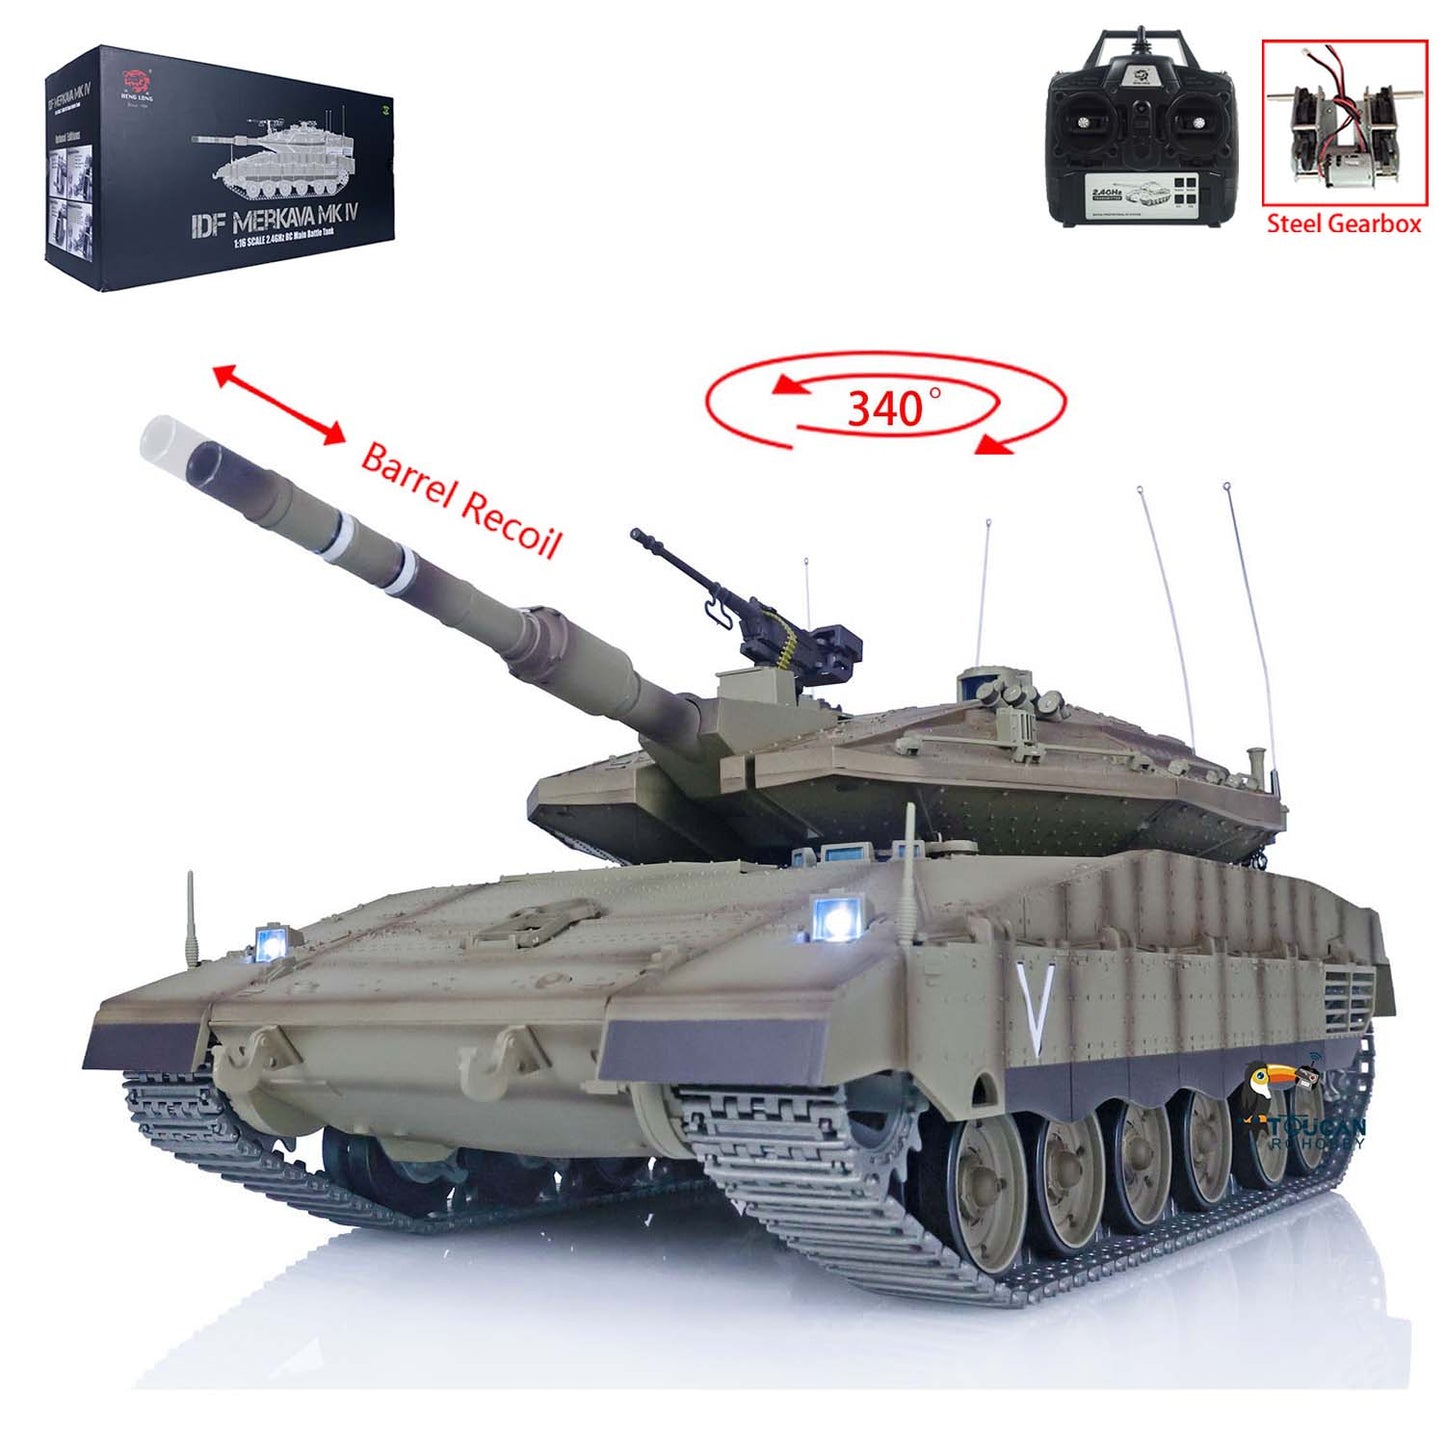 1:16 RC Military Battle Tanks Heng Long IDF Merkava MK IV 3958 Upgraded Edition W/ Metal Driving Gearbox Tracks RC Model